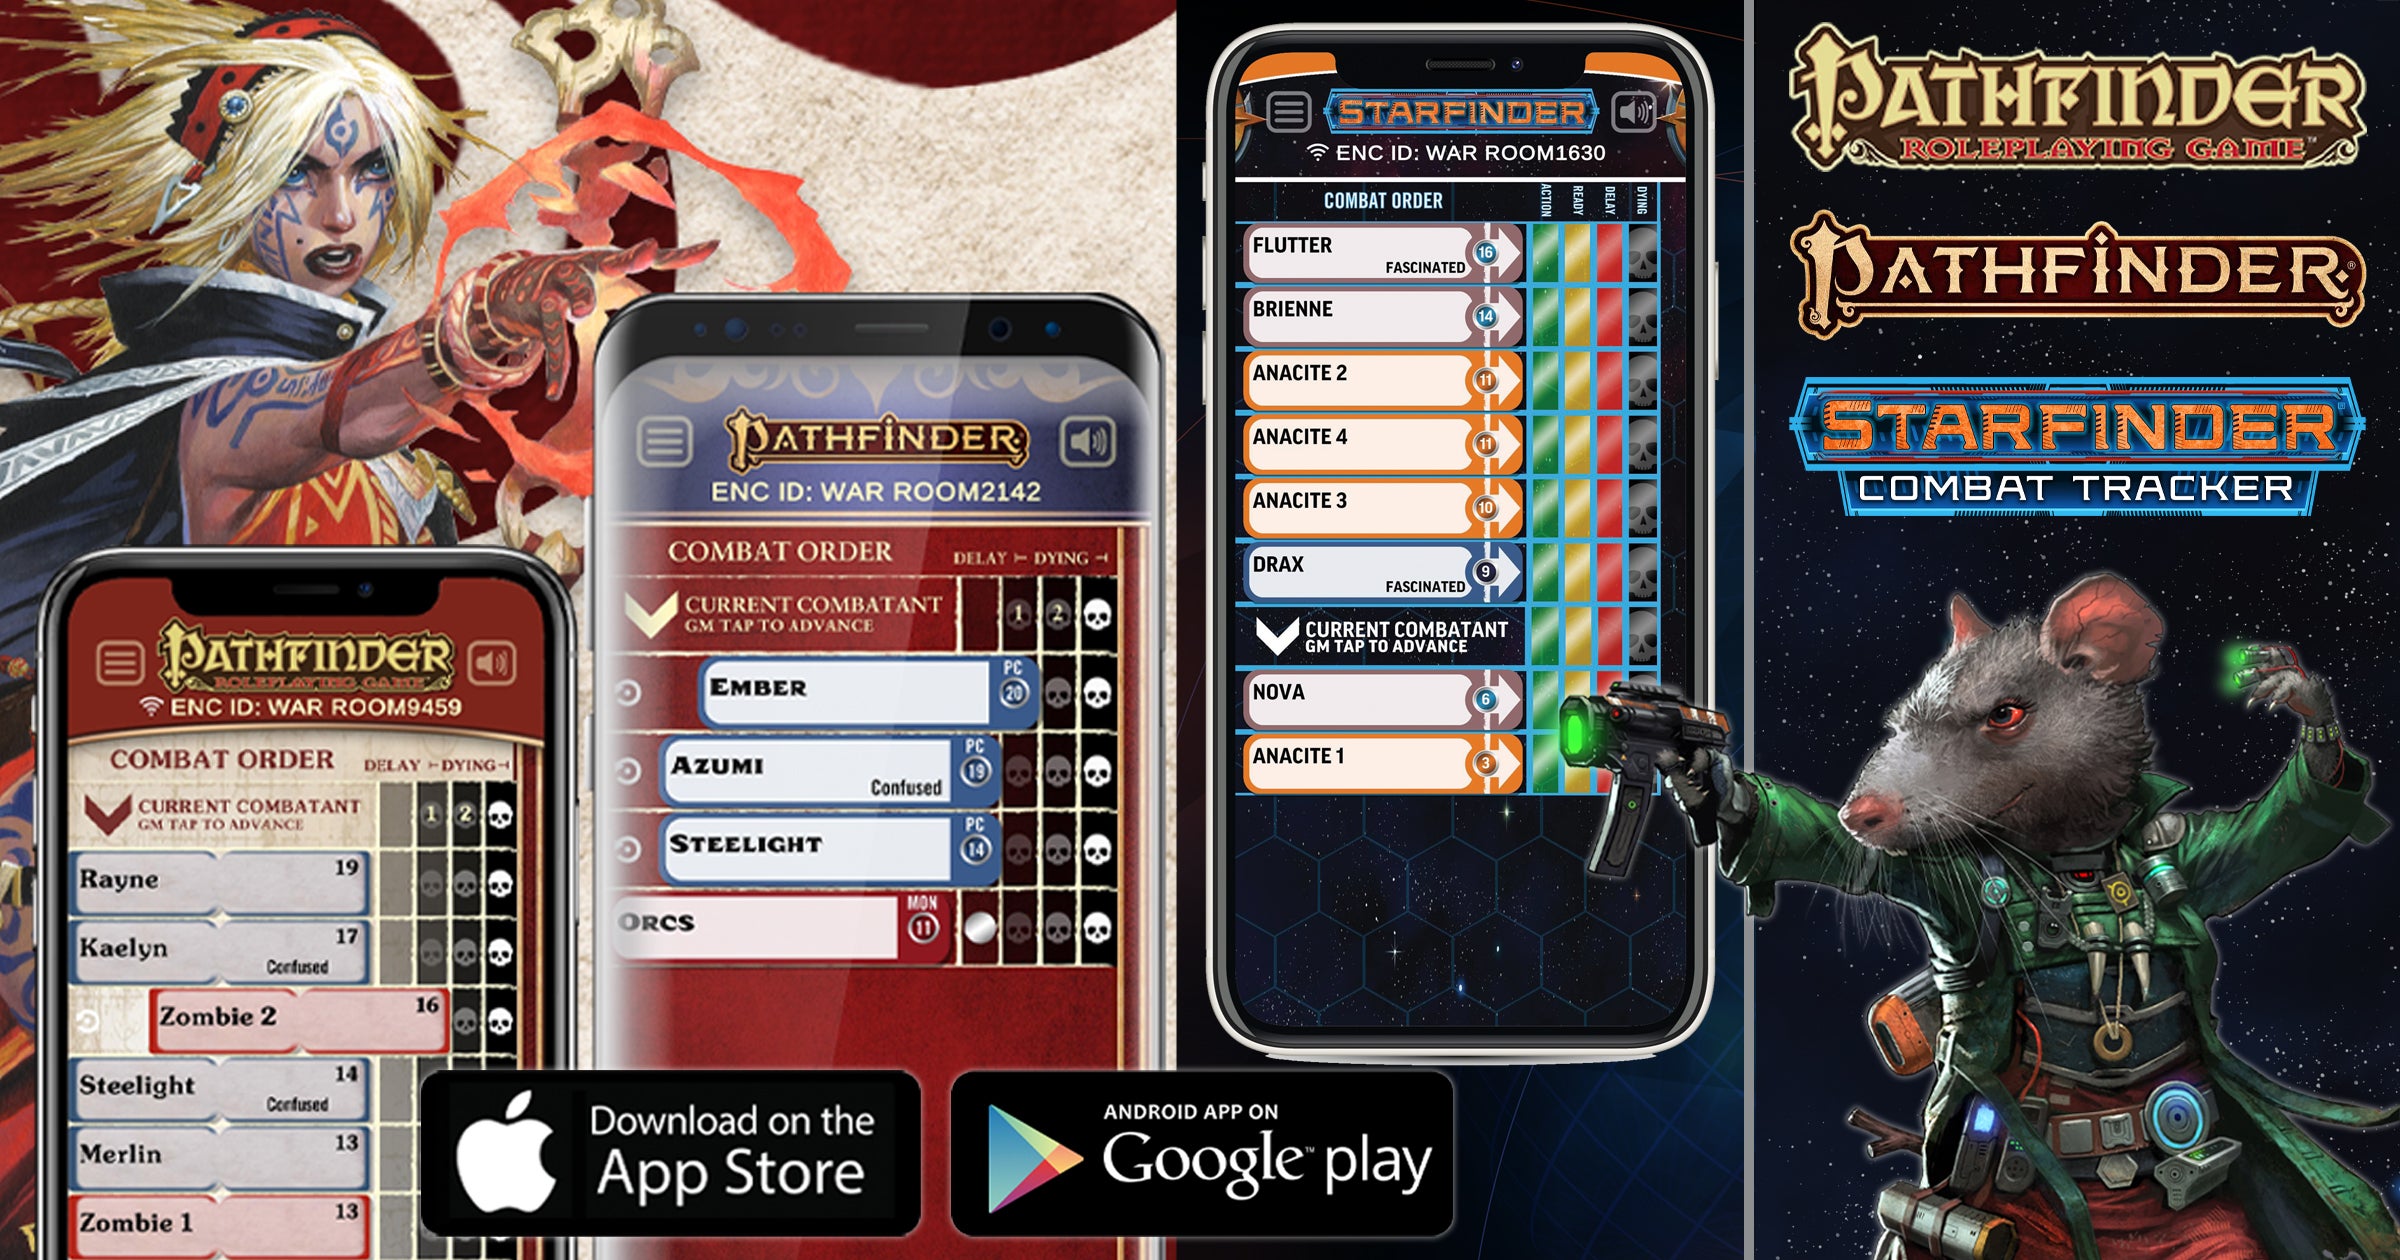 Digital Dragons Combat Tracker App ui for both pathfinder and starfinder